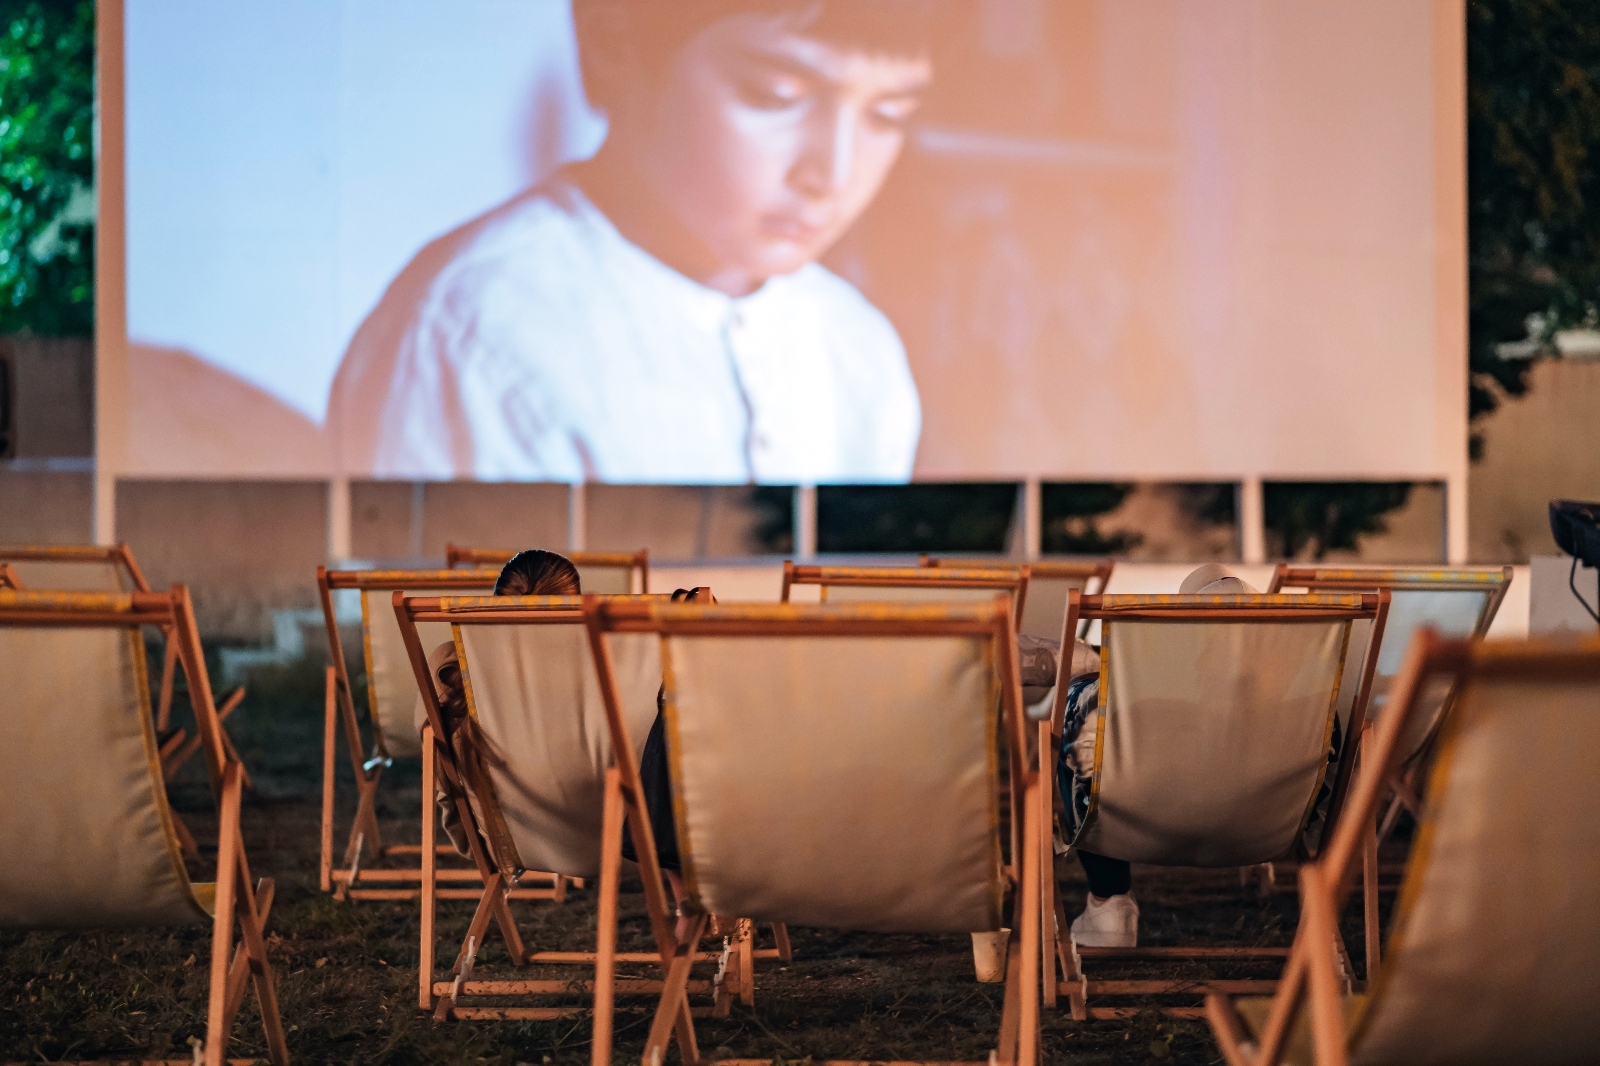 Fundacion CINEARUBA ta buscando peliculanan local pa presenta durante e festival di cine di Playa